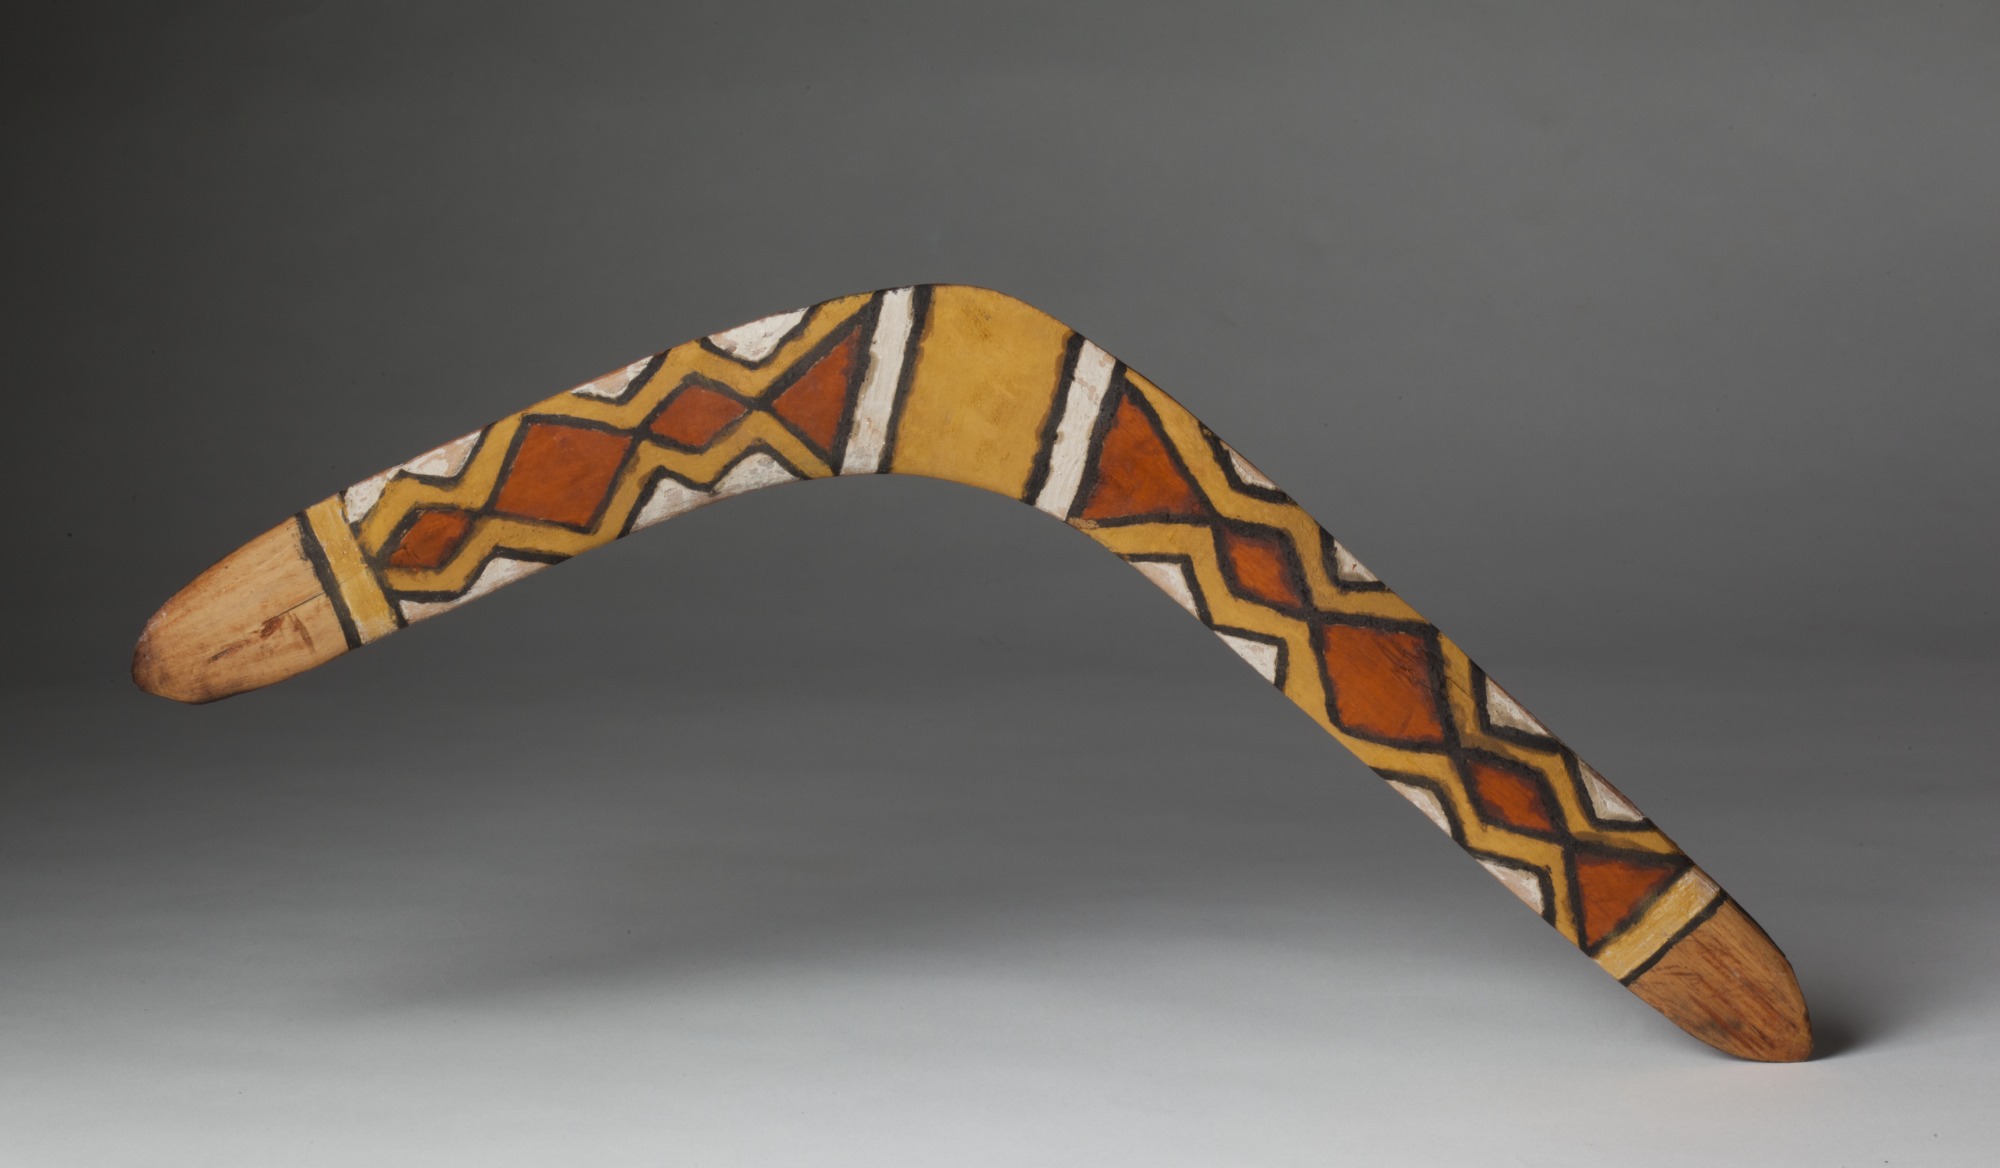 Pigmented, wooden boomerang.